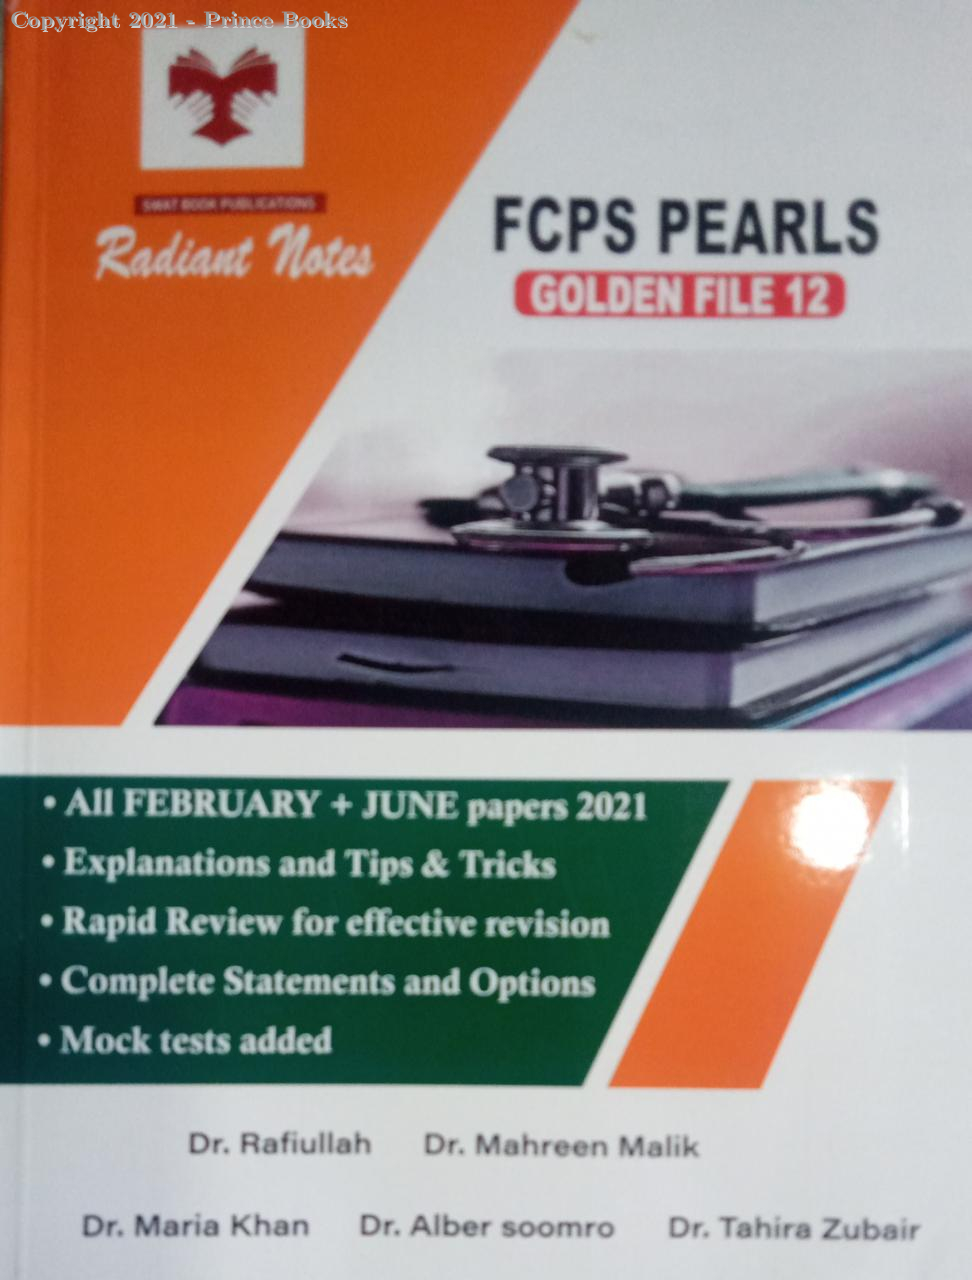 Radiant Notes FCPS Pearls golden file 12